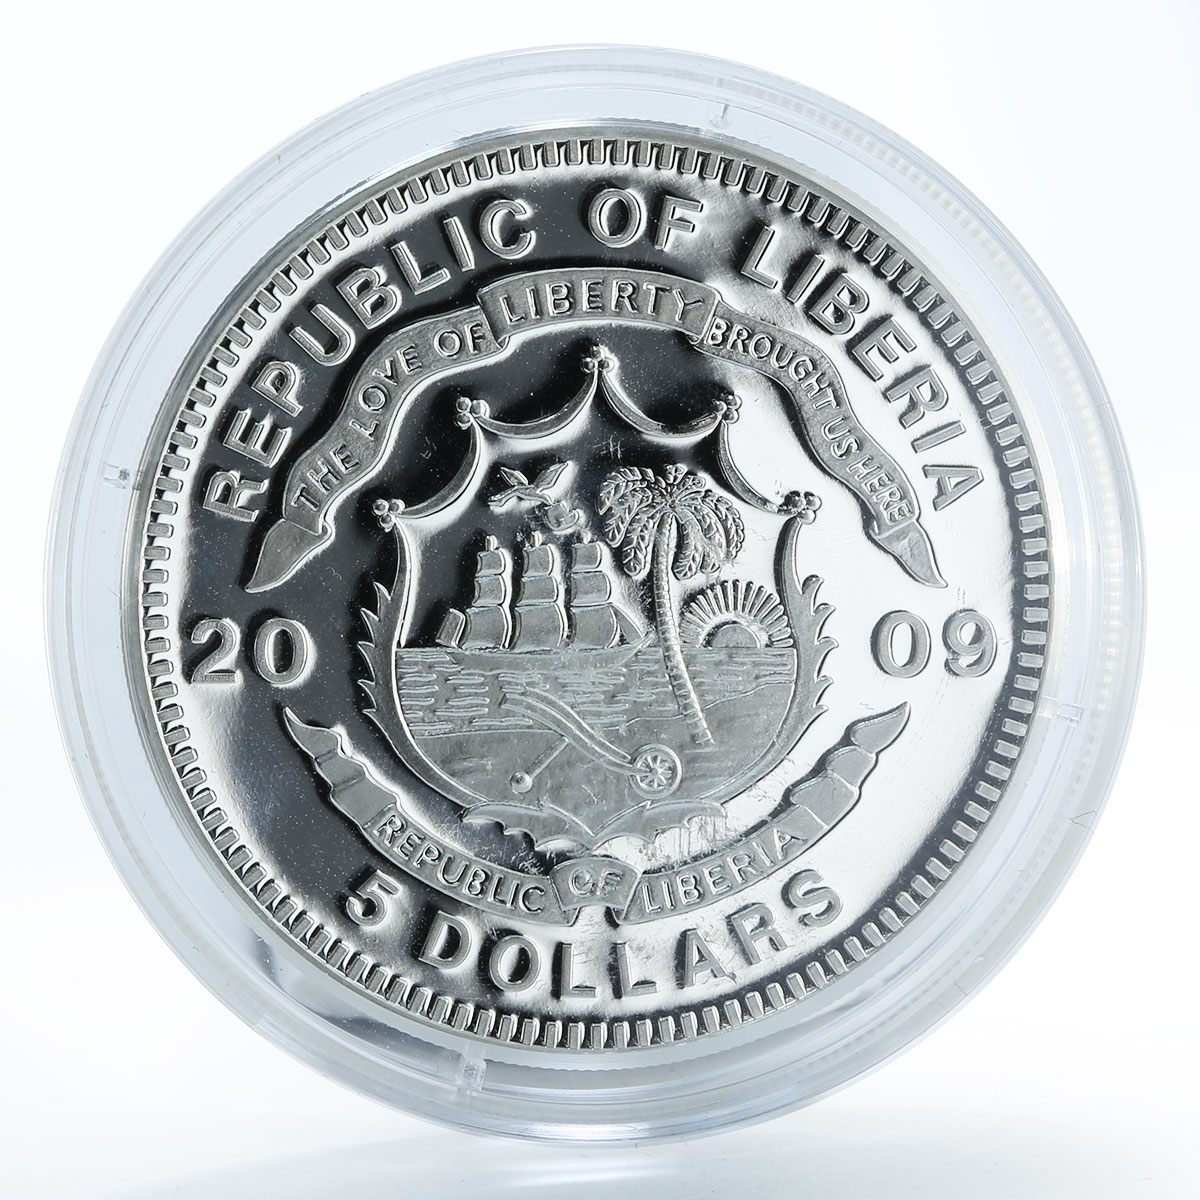 Liberia 5 dollars Apostle Paulus faith religoin silver gold-plated coin 2009